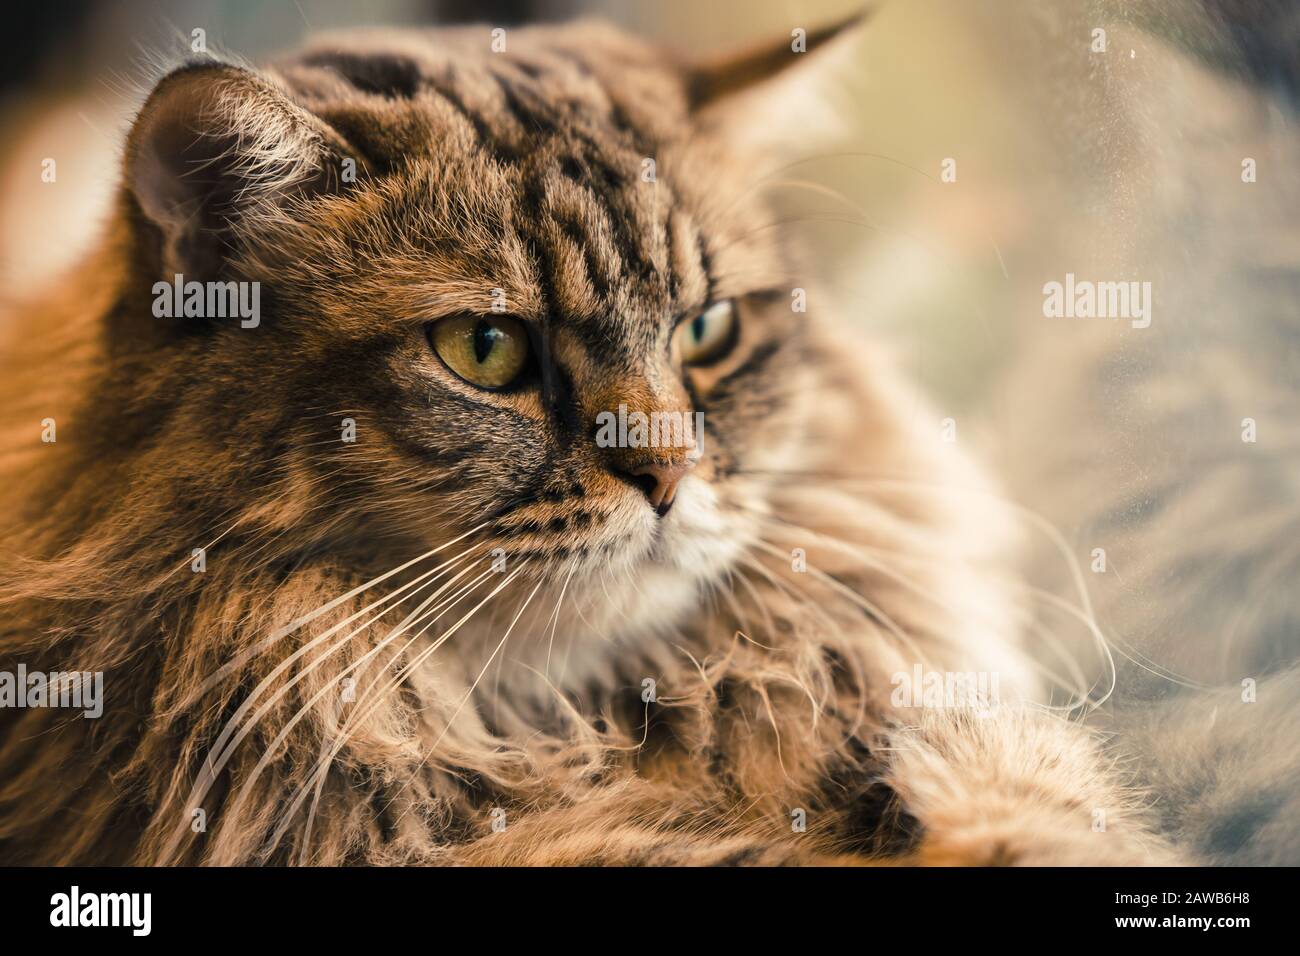 close-up hairy long fur cat animal pet looking away serious moody face Stock Photo